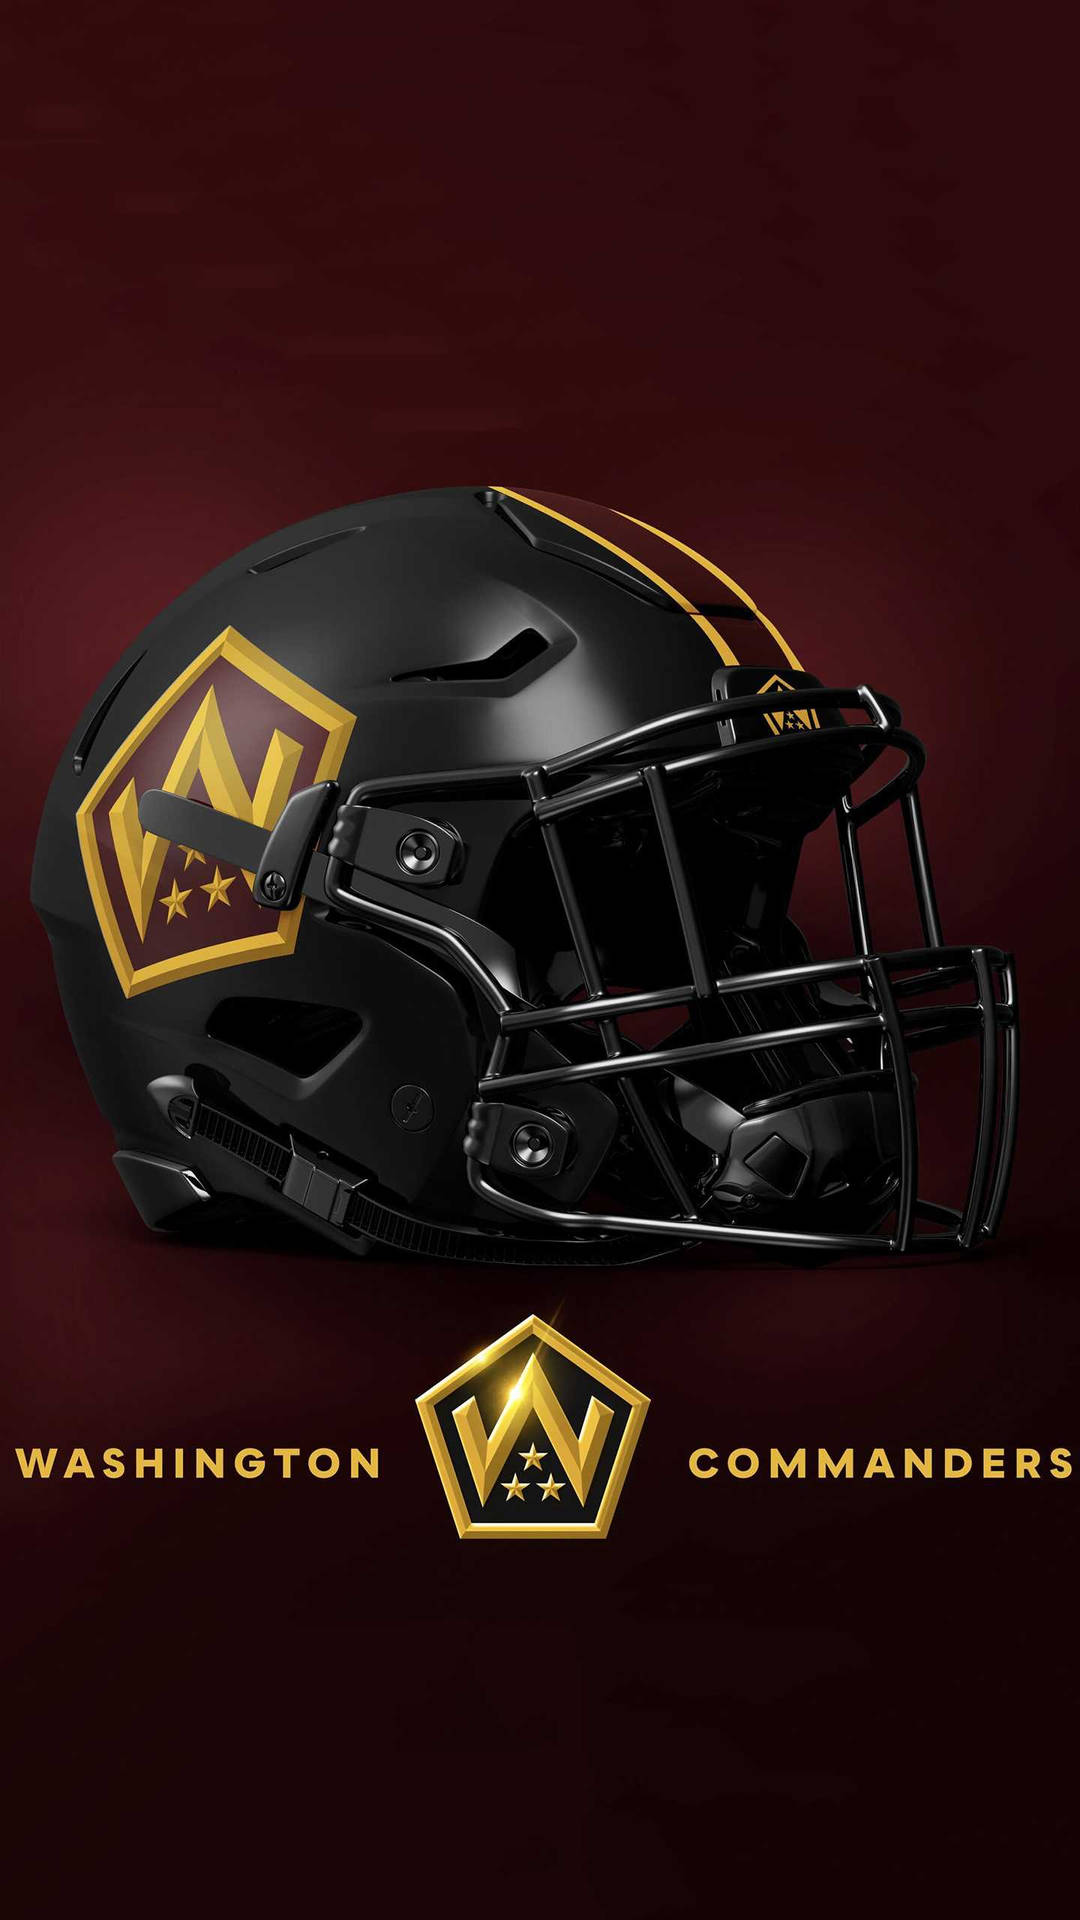 washington commanders helmet